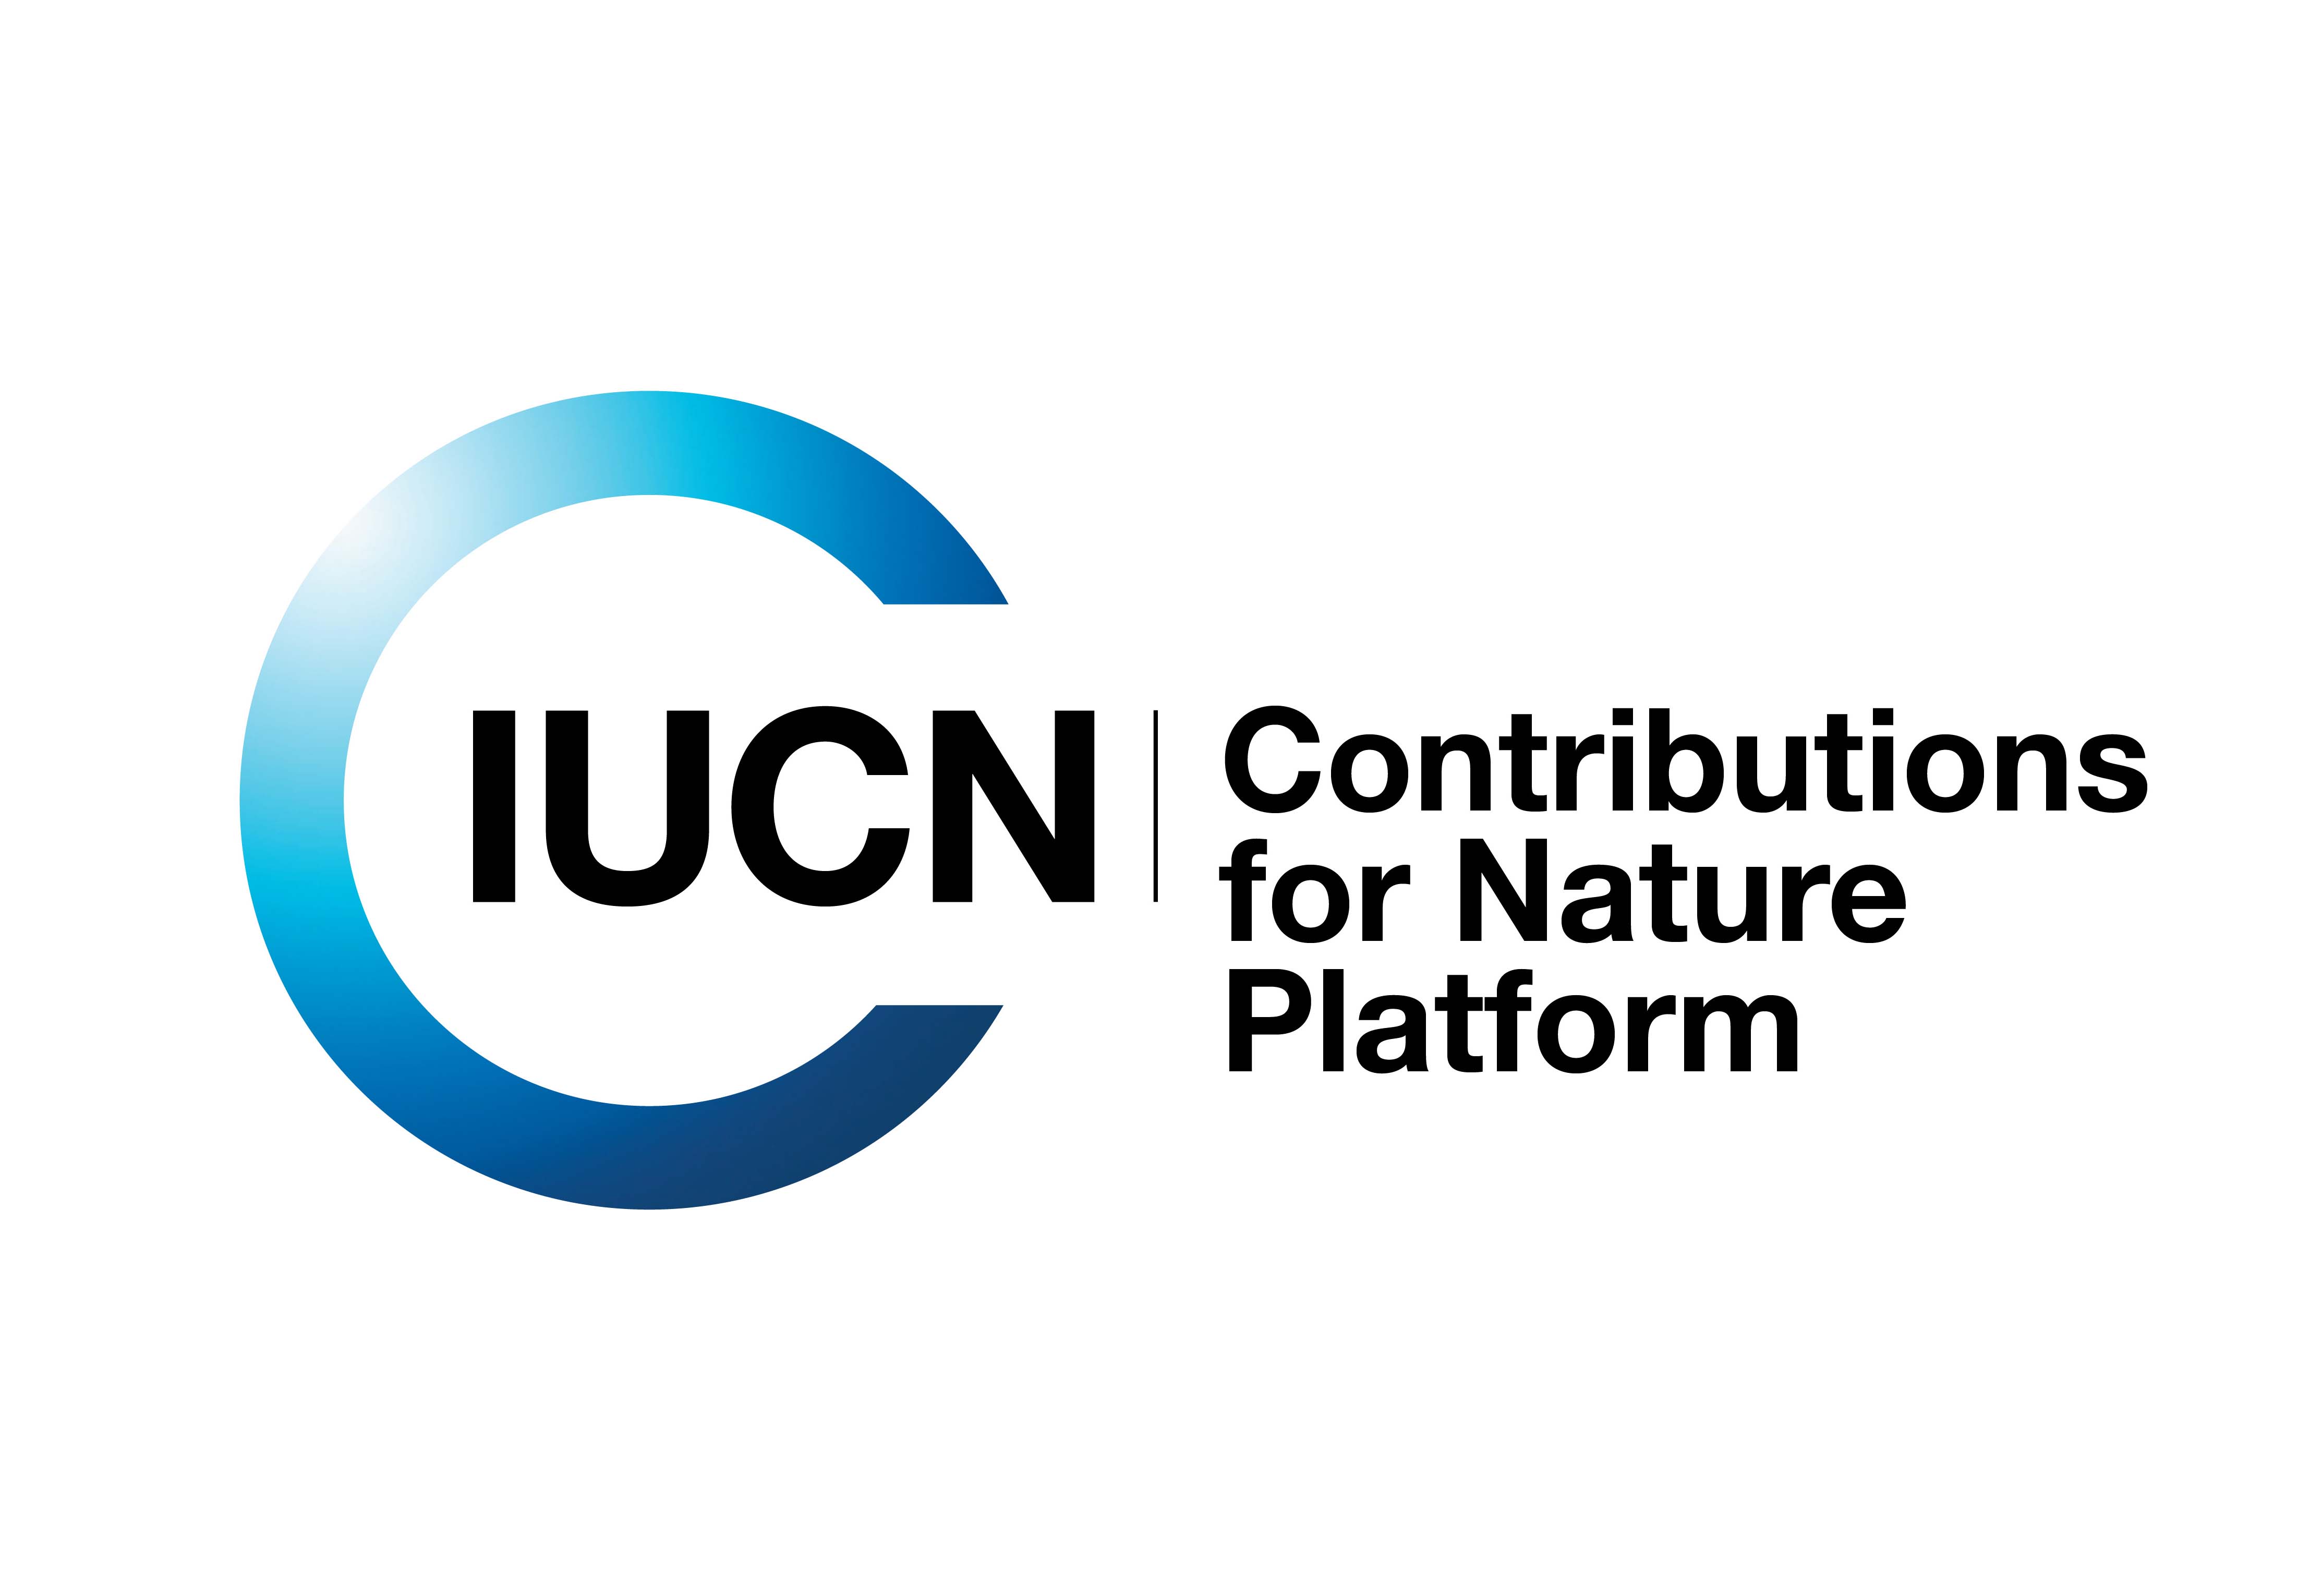 IUCN Contributions for Nature Platform logo